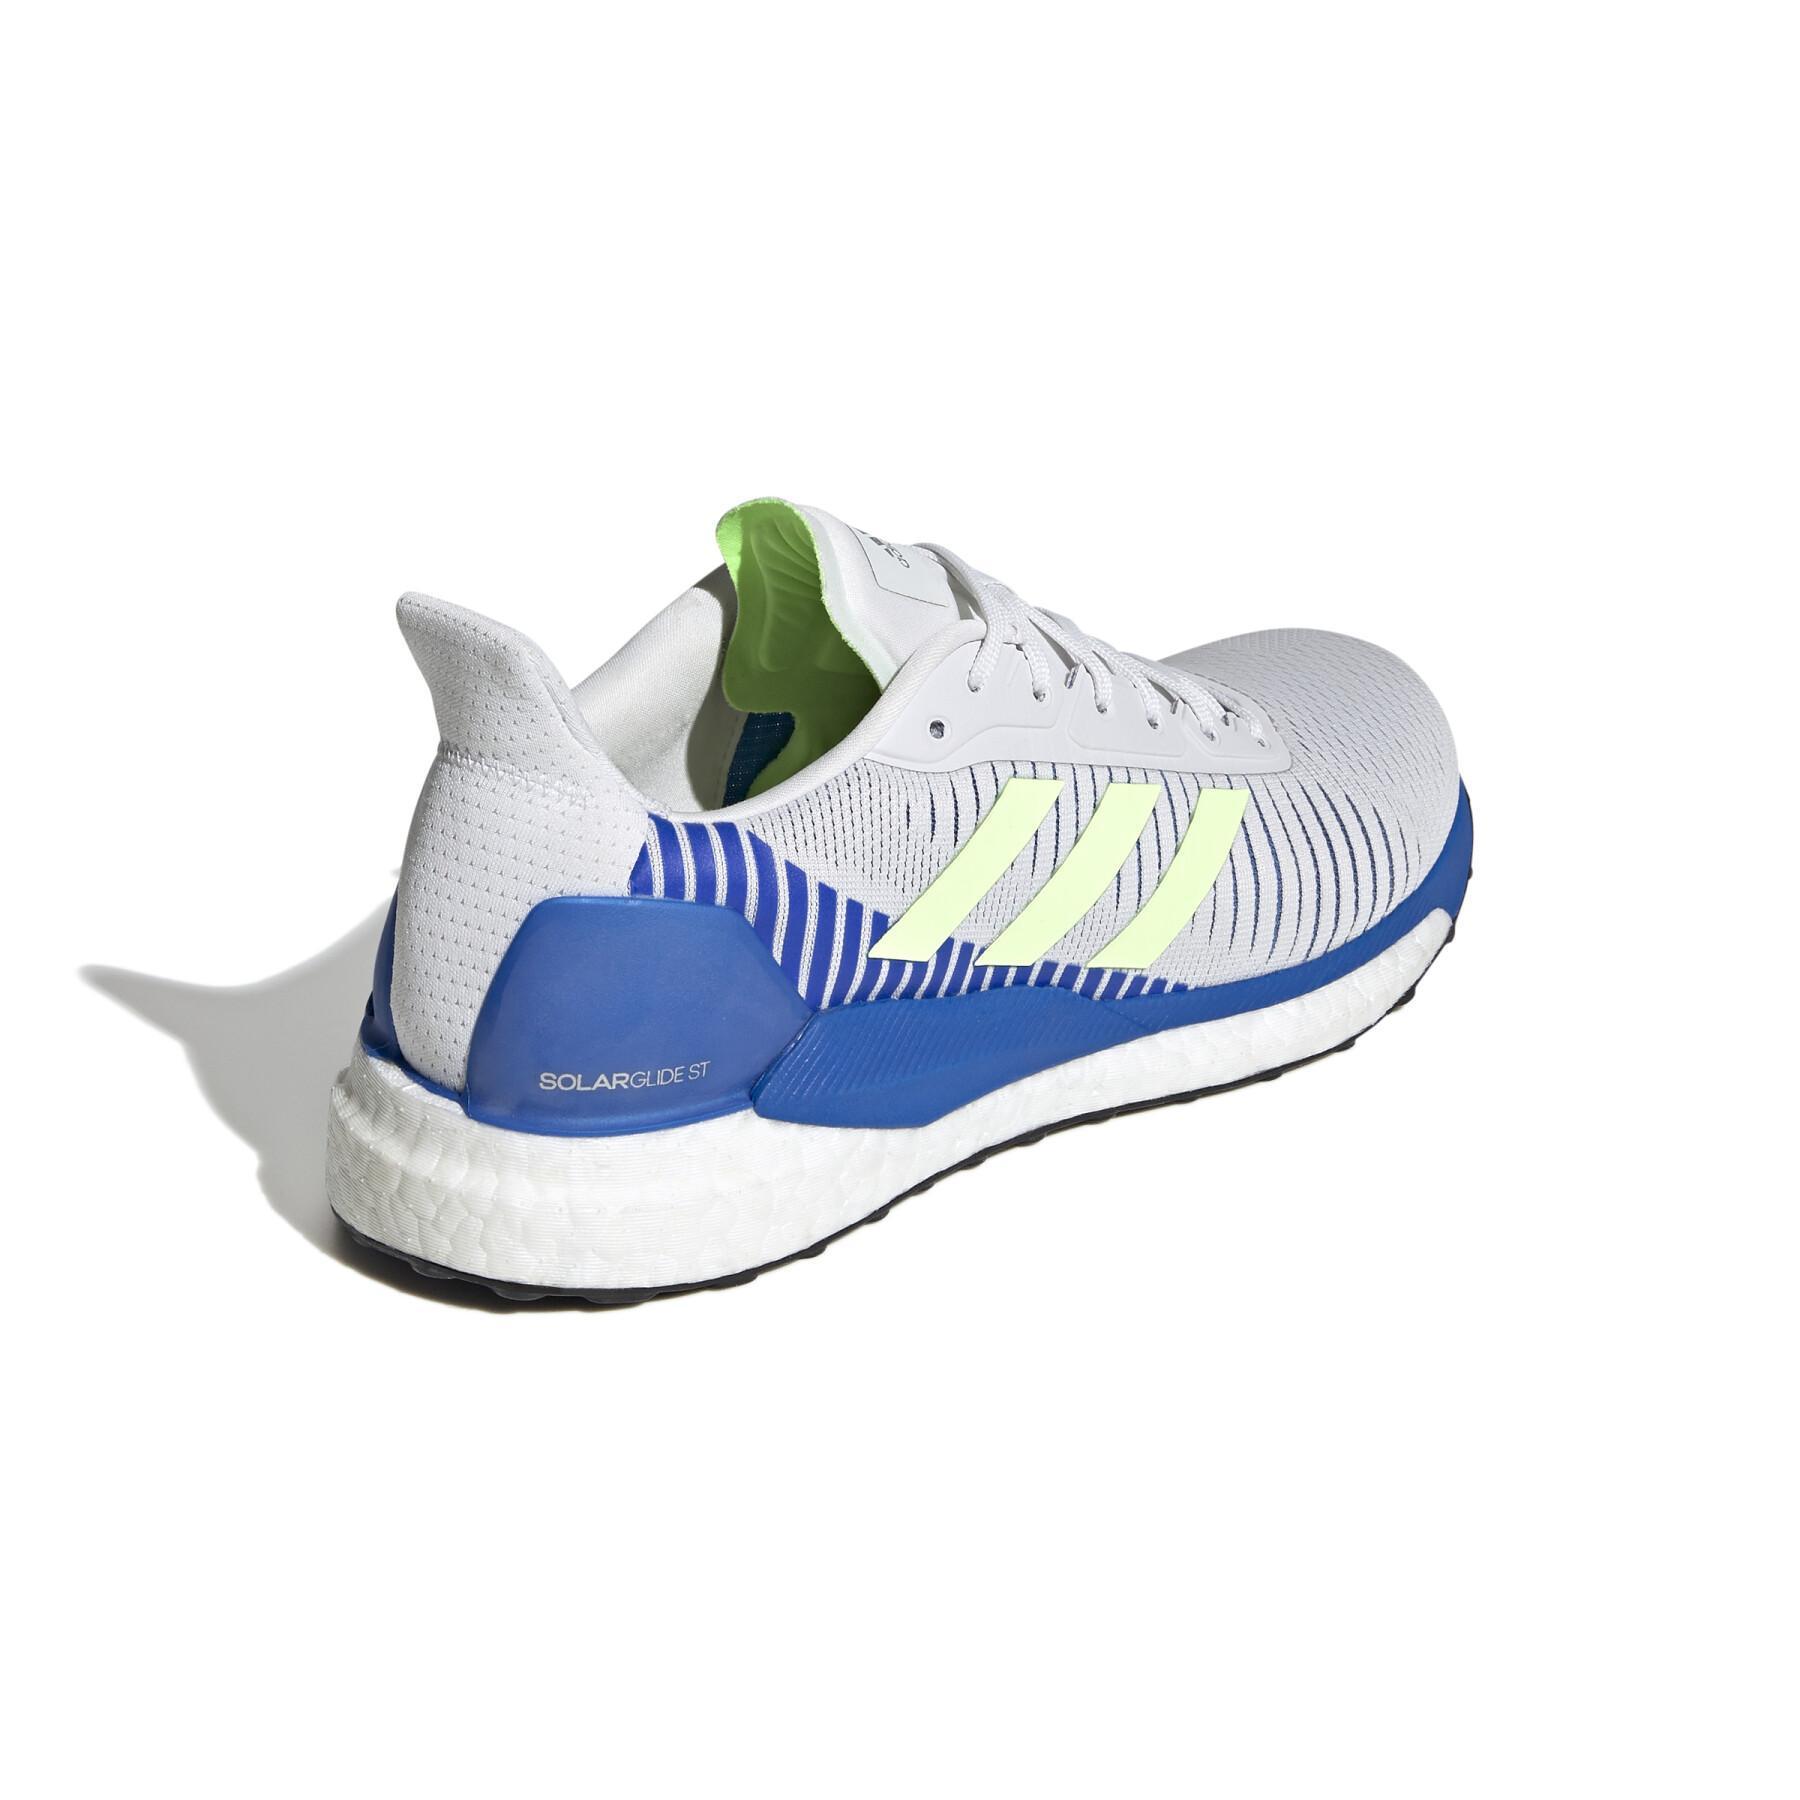 Sapatos adidas Solar Glide ST 19